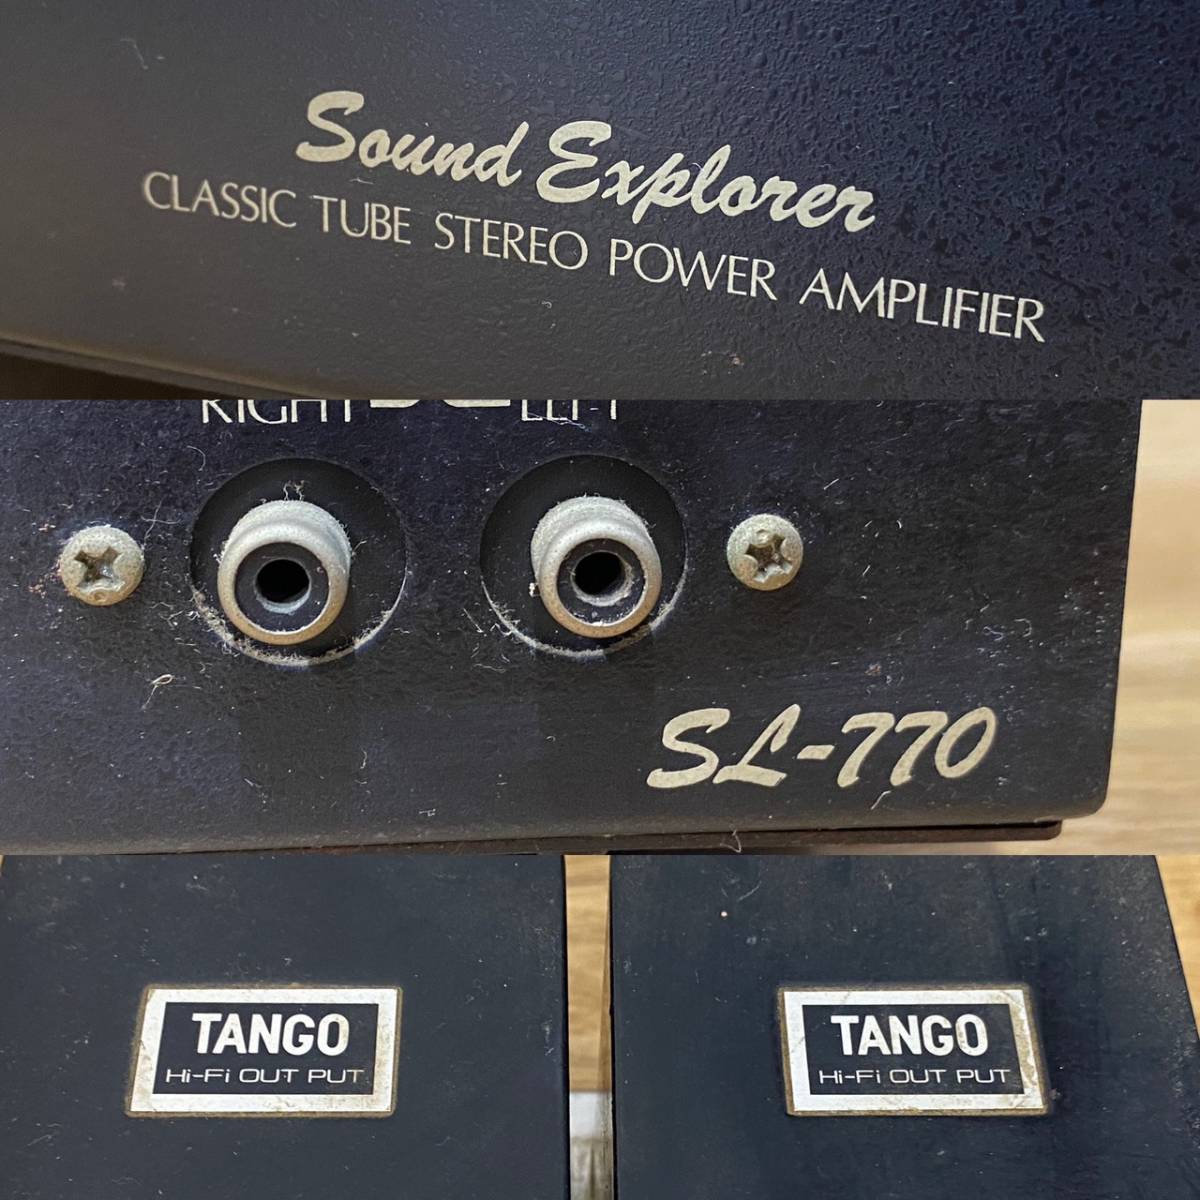 Sound Explorer サウンドエクスプローラー 真空管 管球式ステレオ